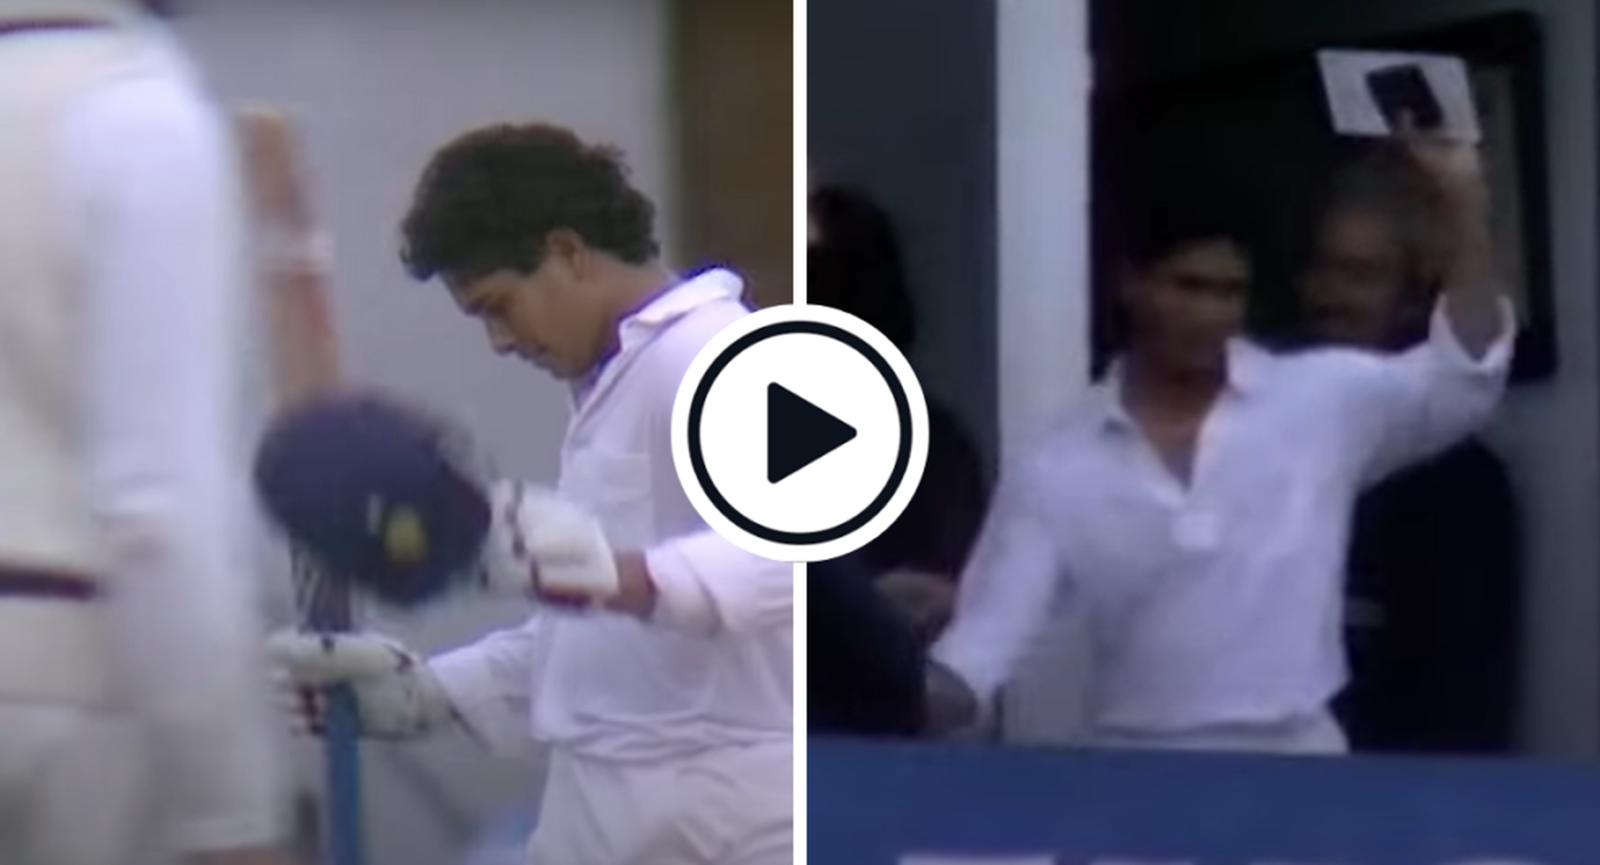 Sachin Tendulkar gets maiden Test hundred (119*, Old Trafford 1990)